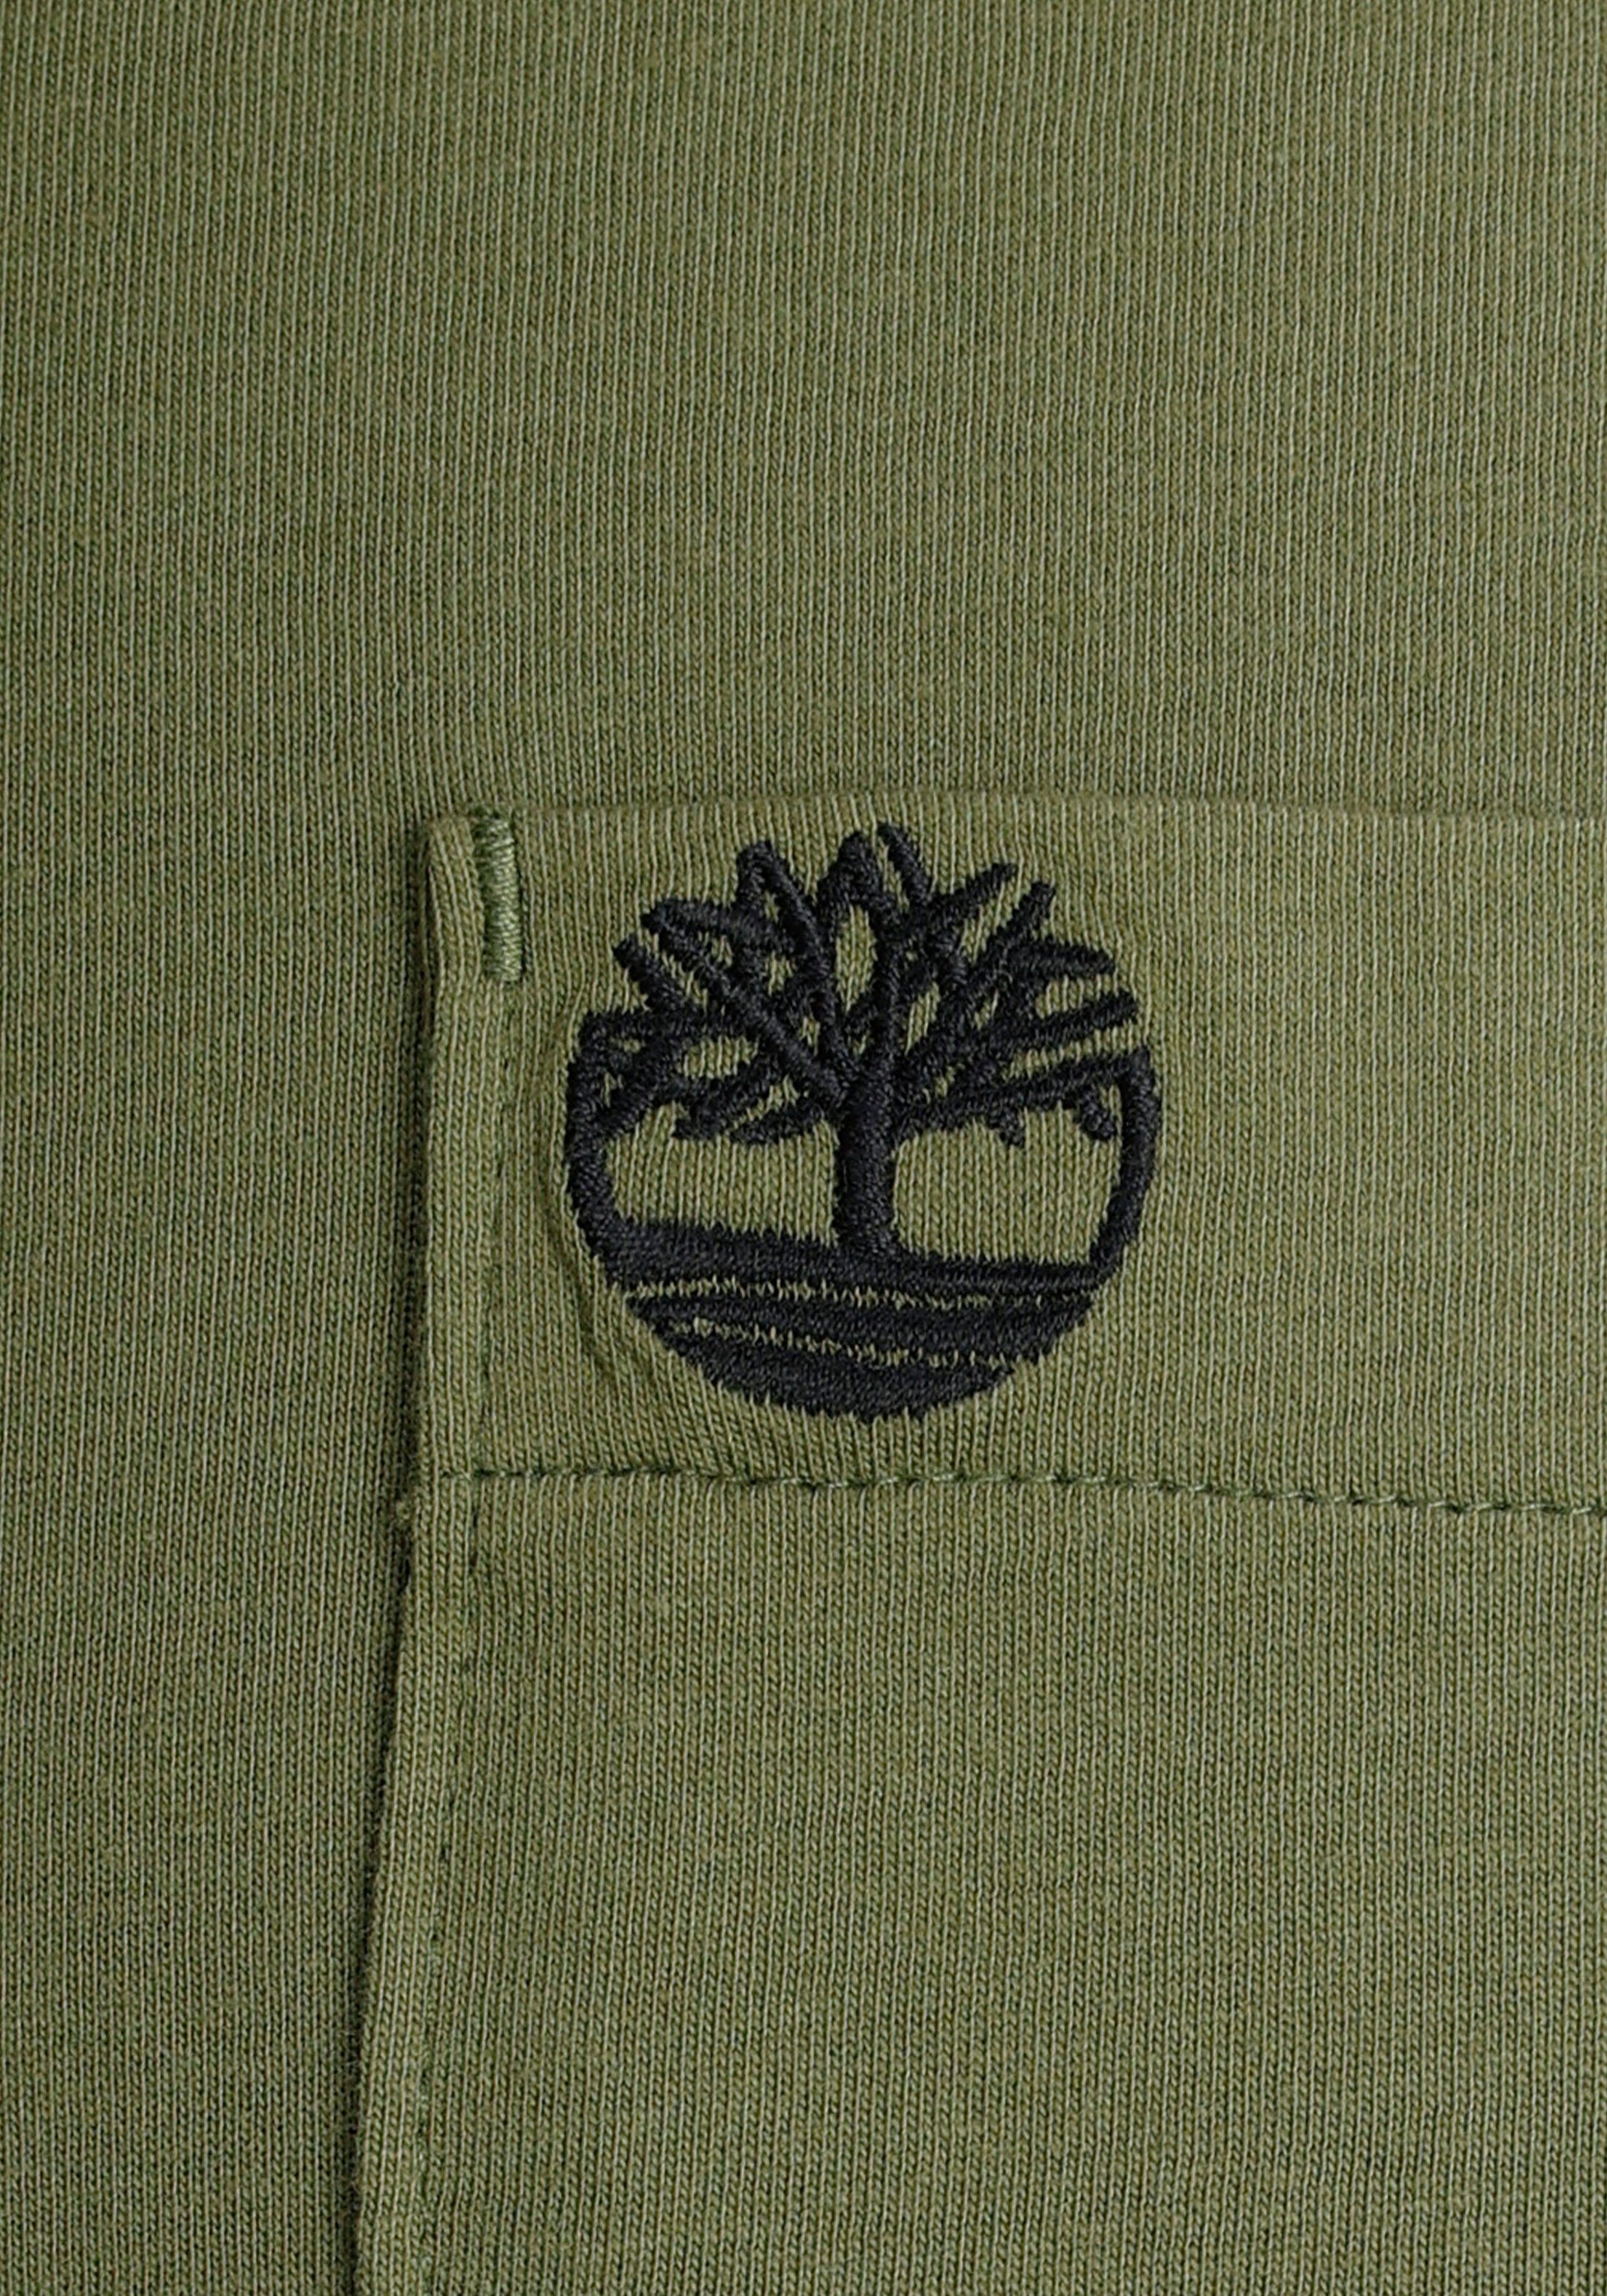 Timberland mayfly T-Shirt TEE DUNSTAN RIVER POCKET